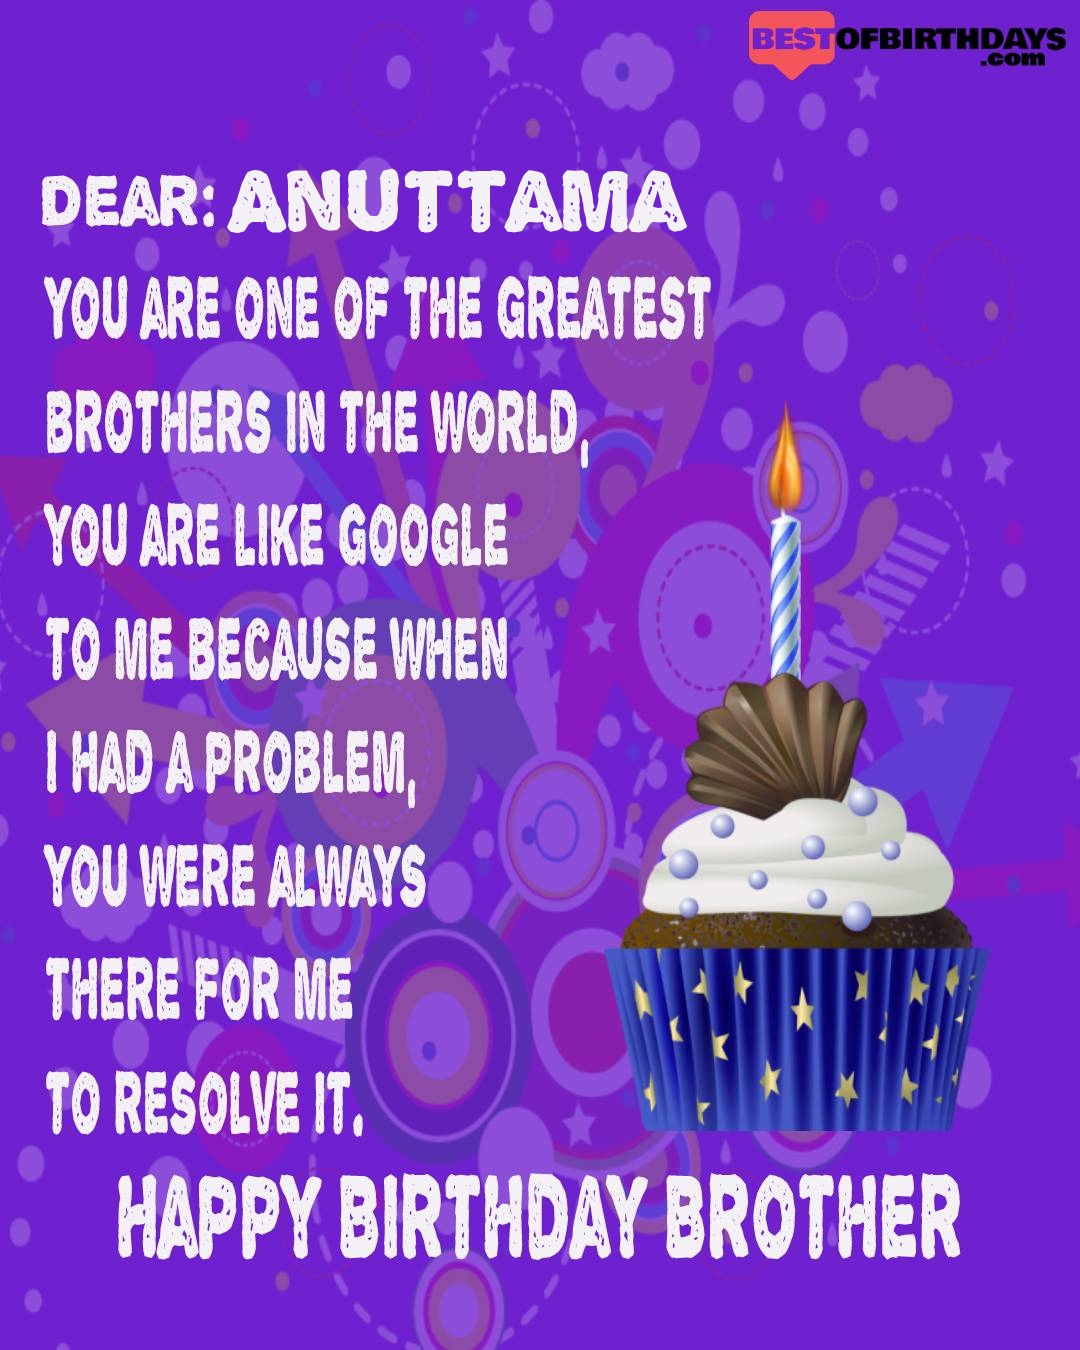 Happy birthday anuttama bhai brother bro